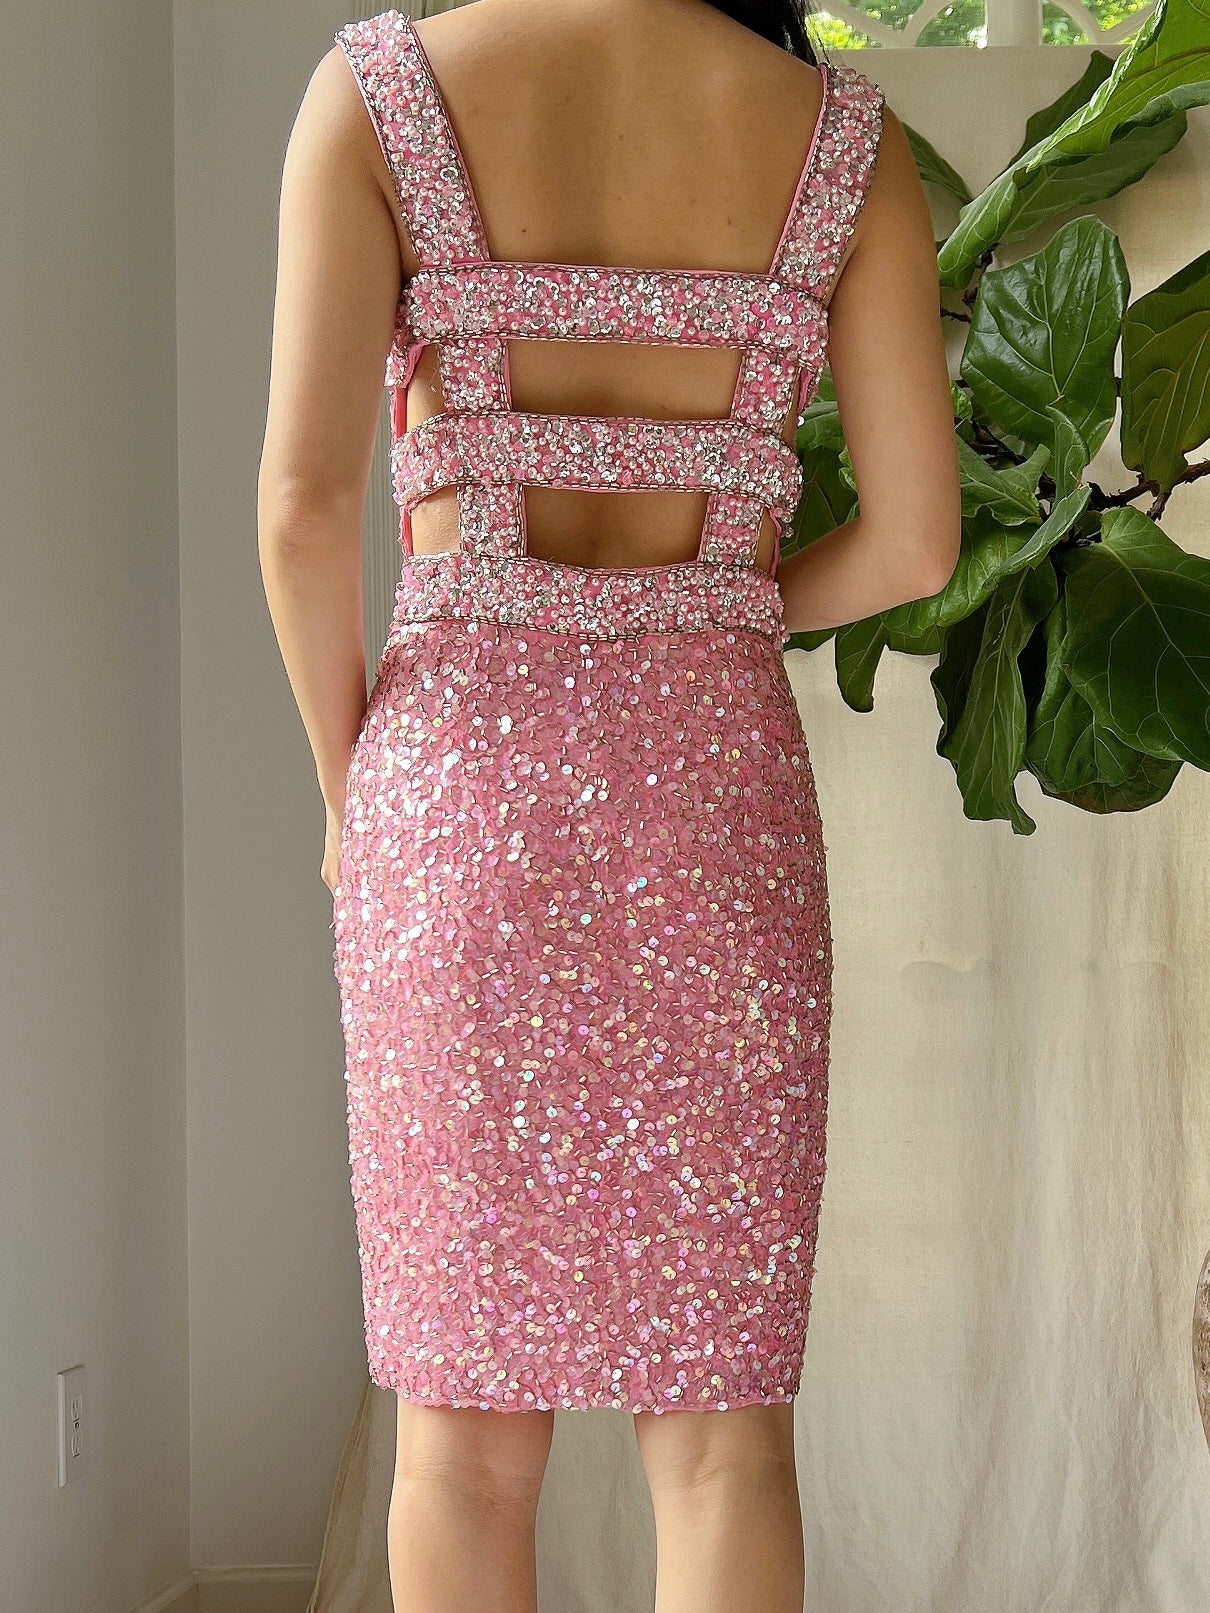 1980s Pink Sequins Dress - S/M